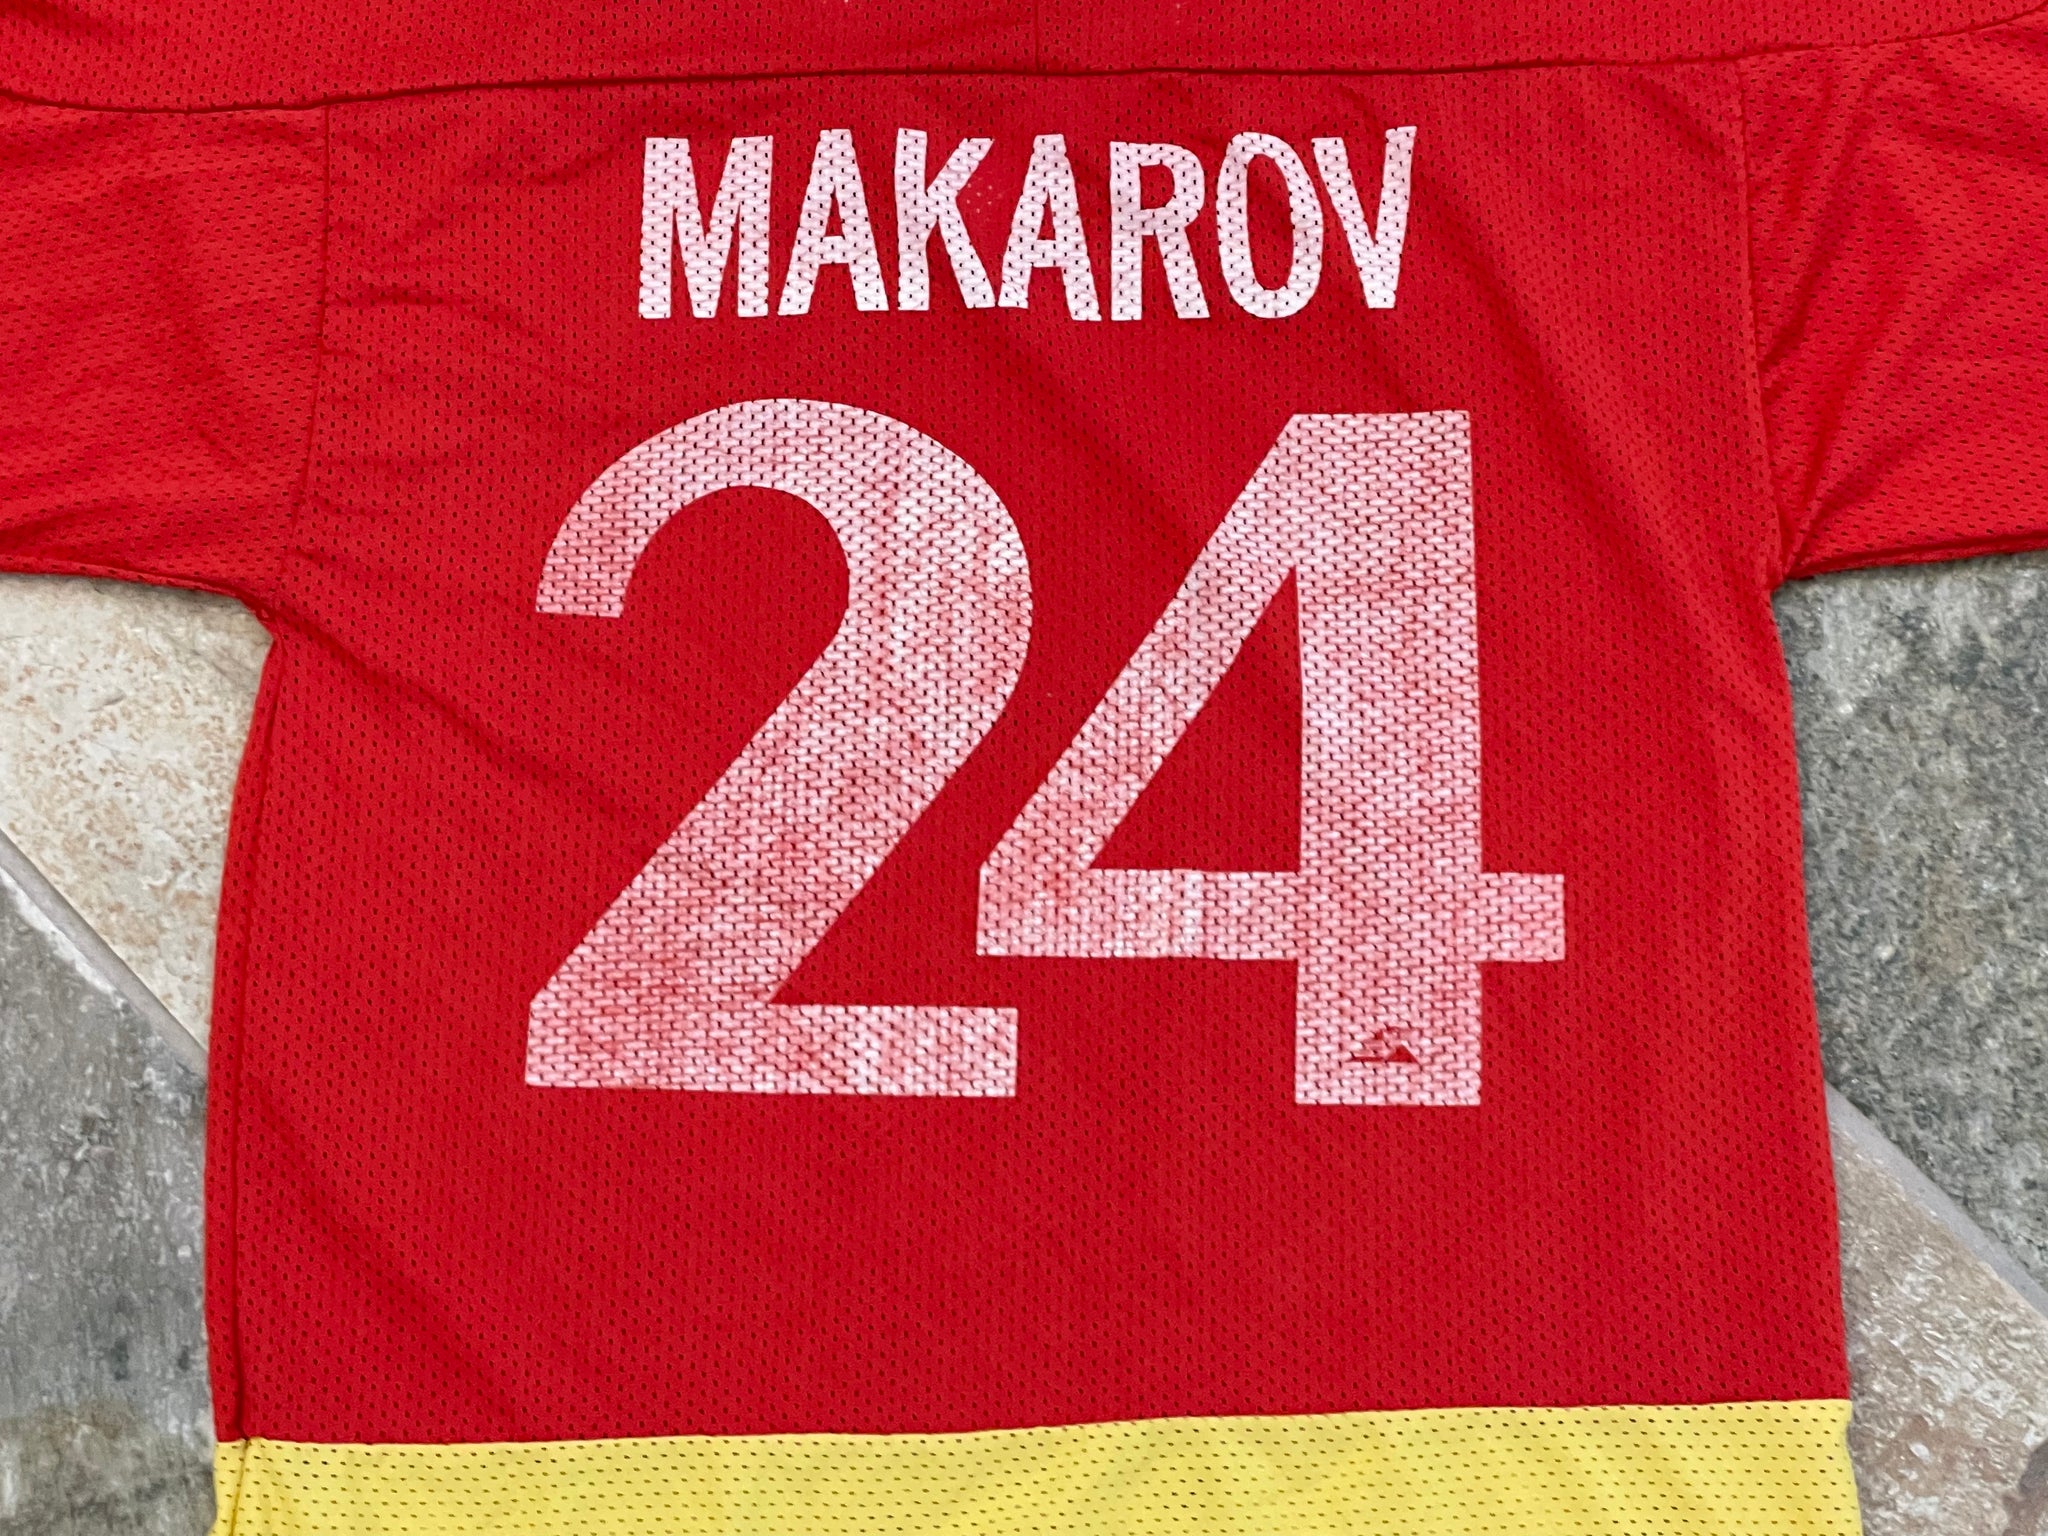 Custom Sergei Makarov #24 CCCP Russia Men's Hockey Jersey